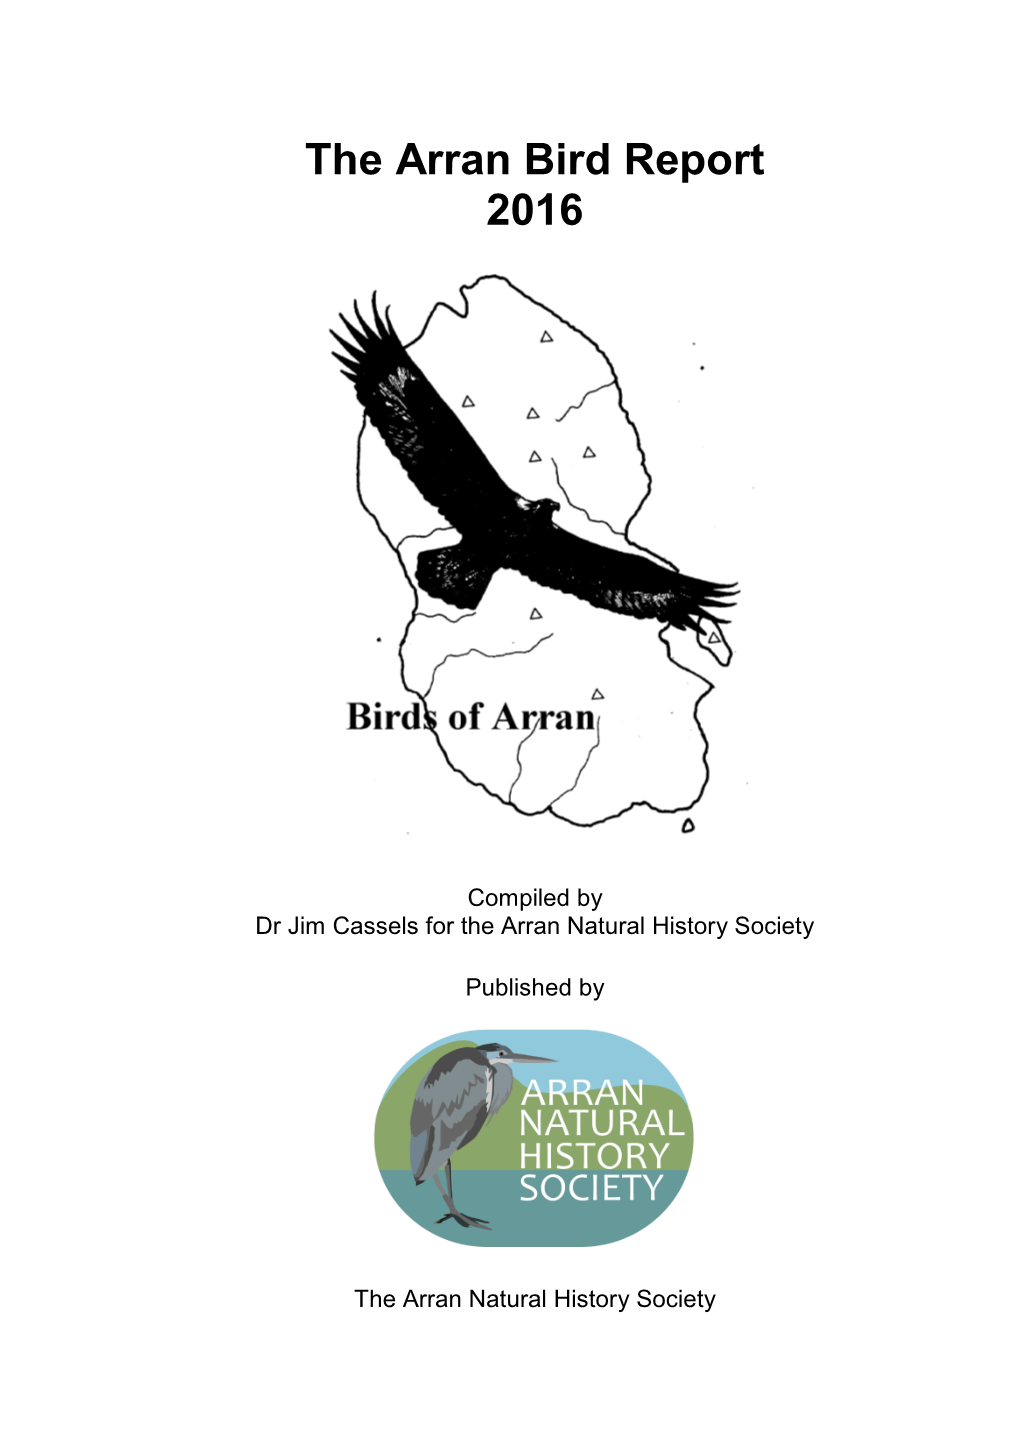 The Arran Bird Report 2016